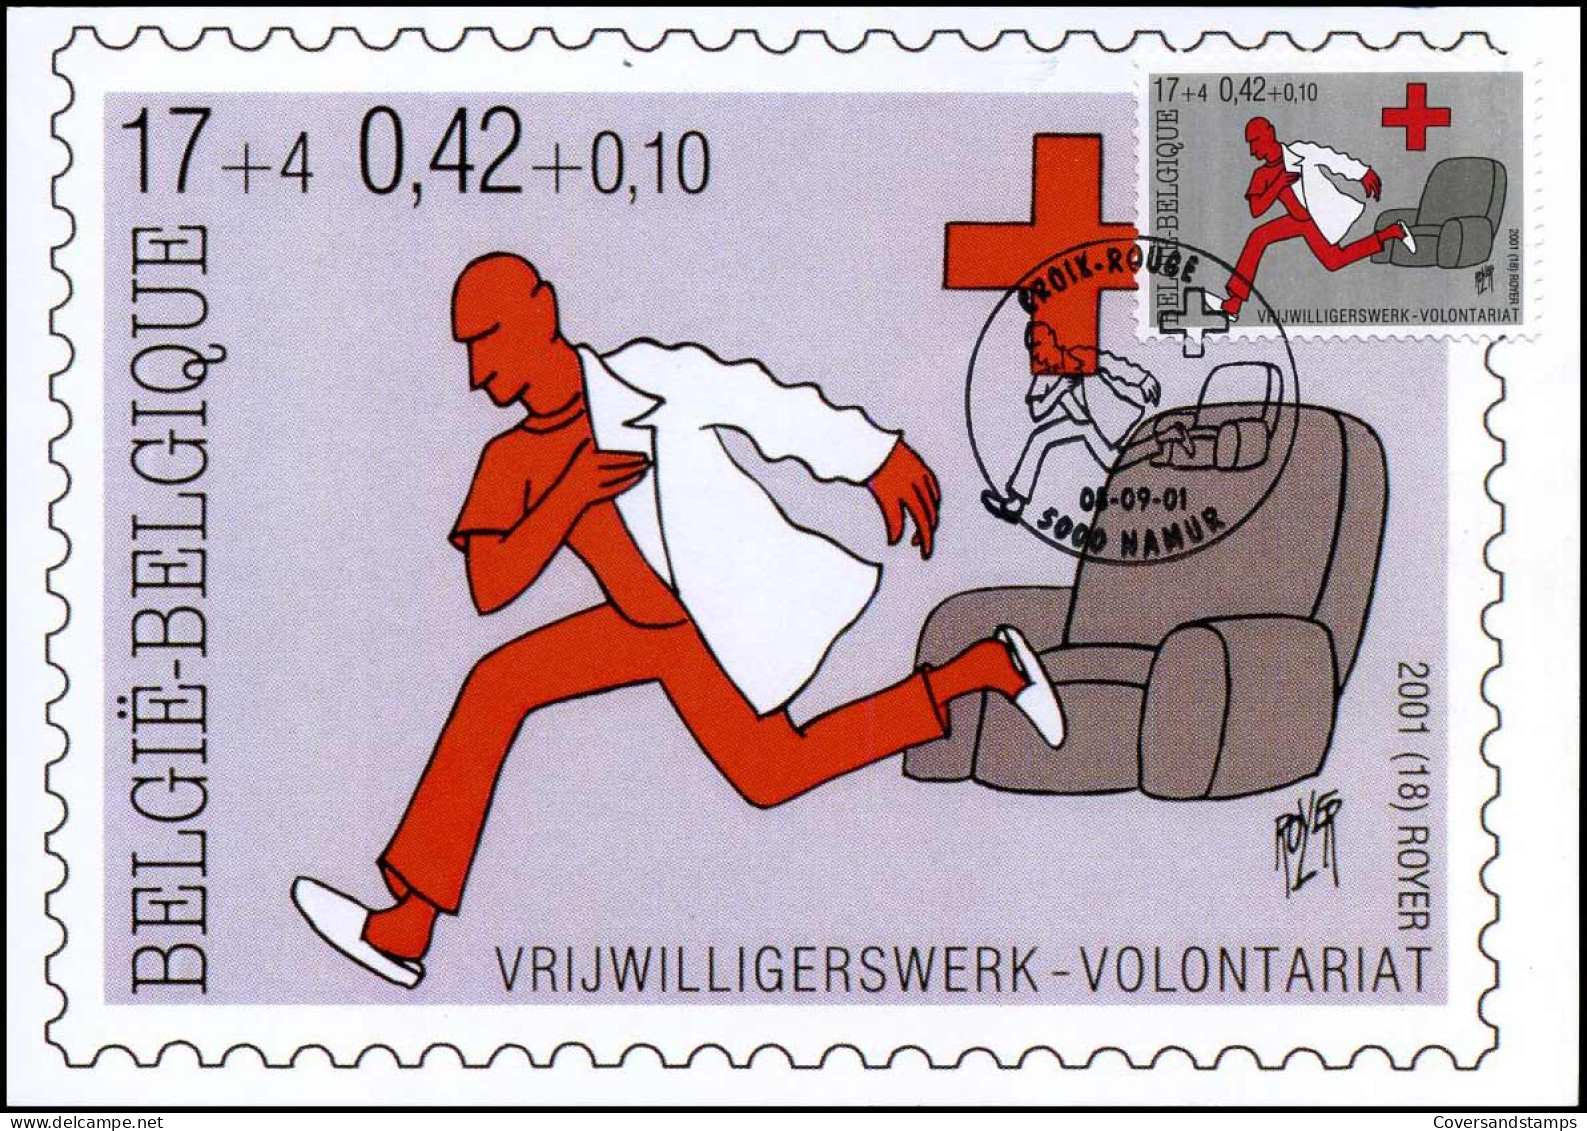 3022 - MK - Rode Kruis - Vrijwilligerswerk - 2001-2010